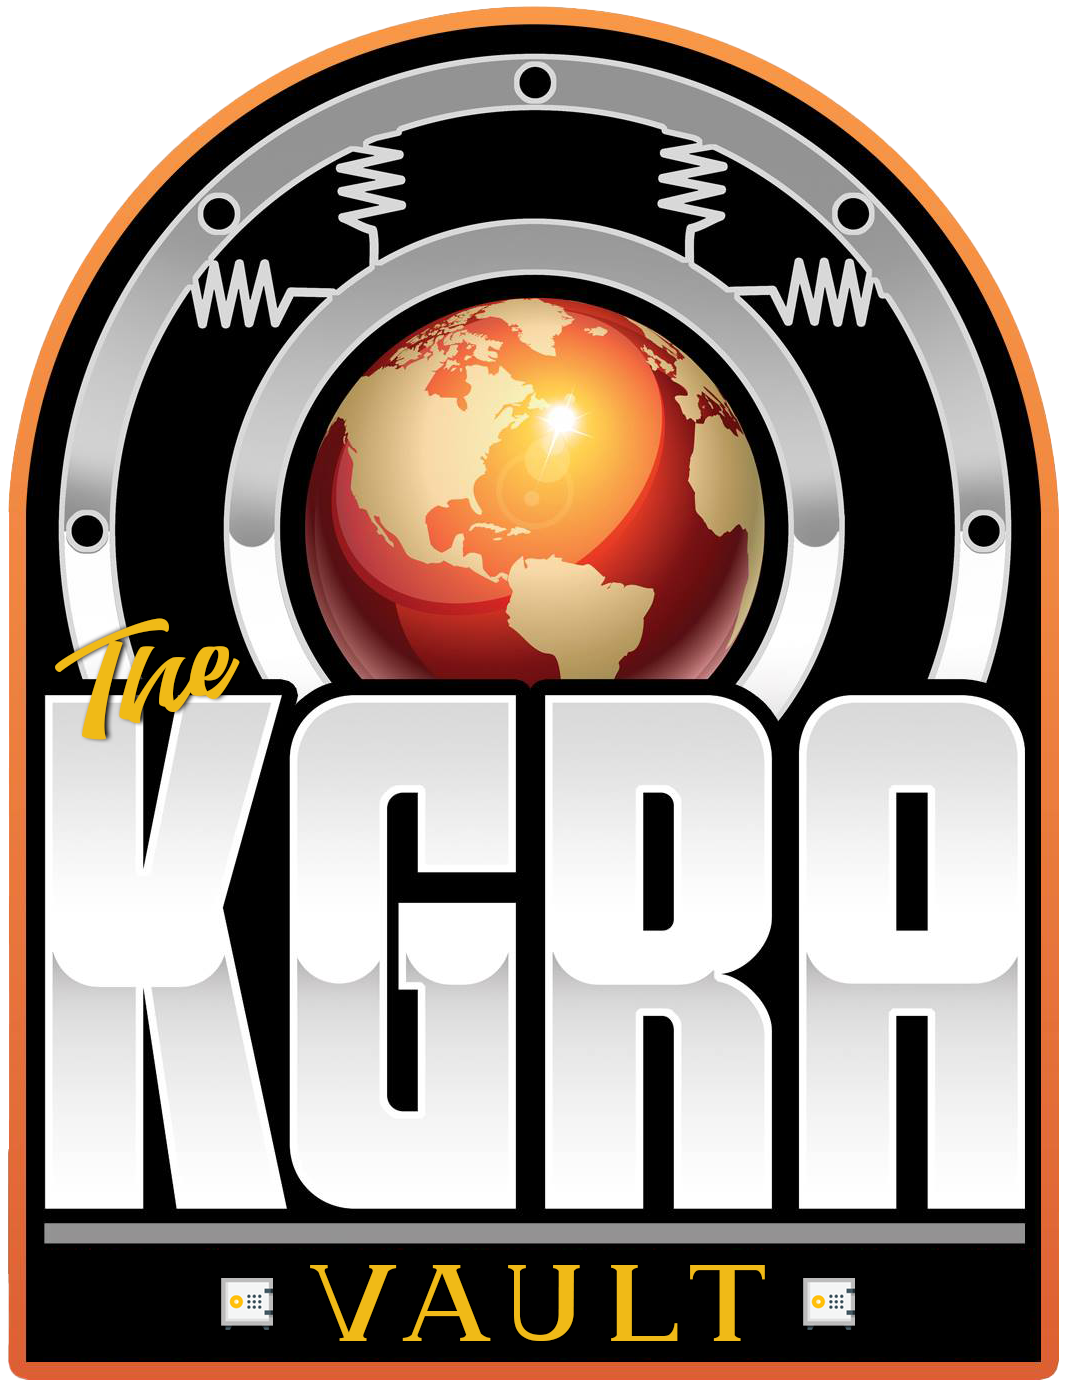 KGRA Vault - Archives & Klassics